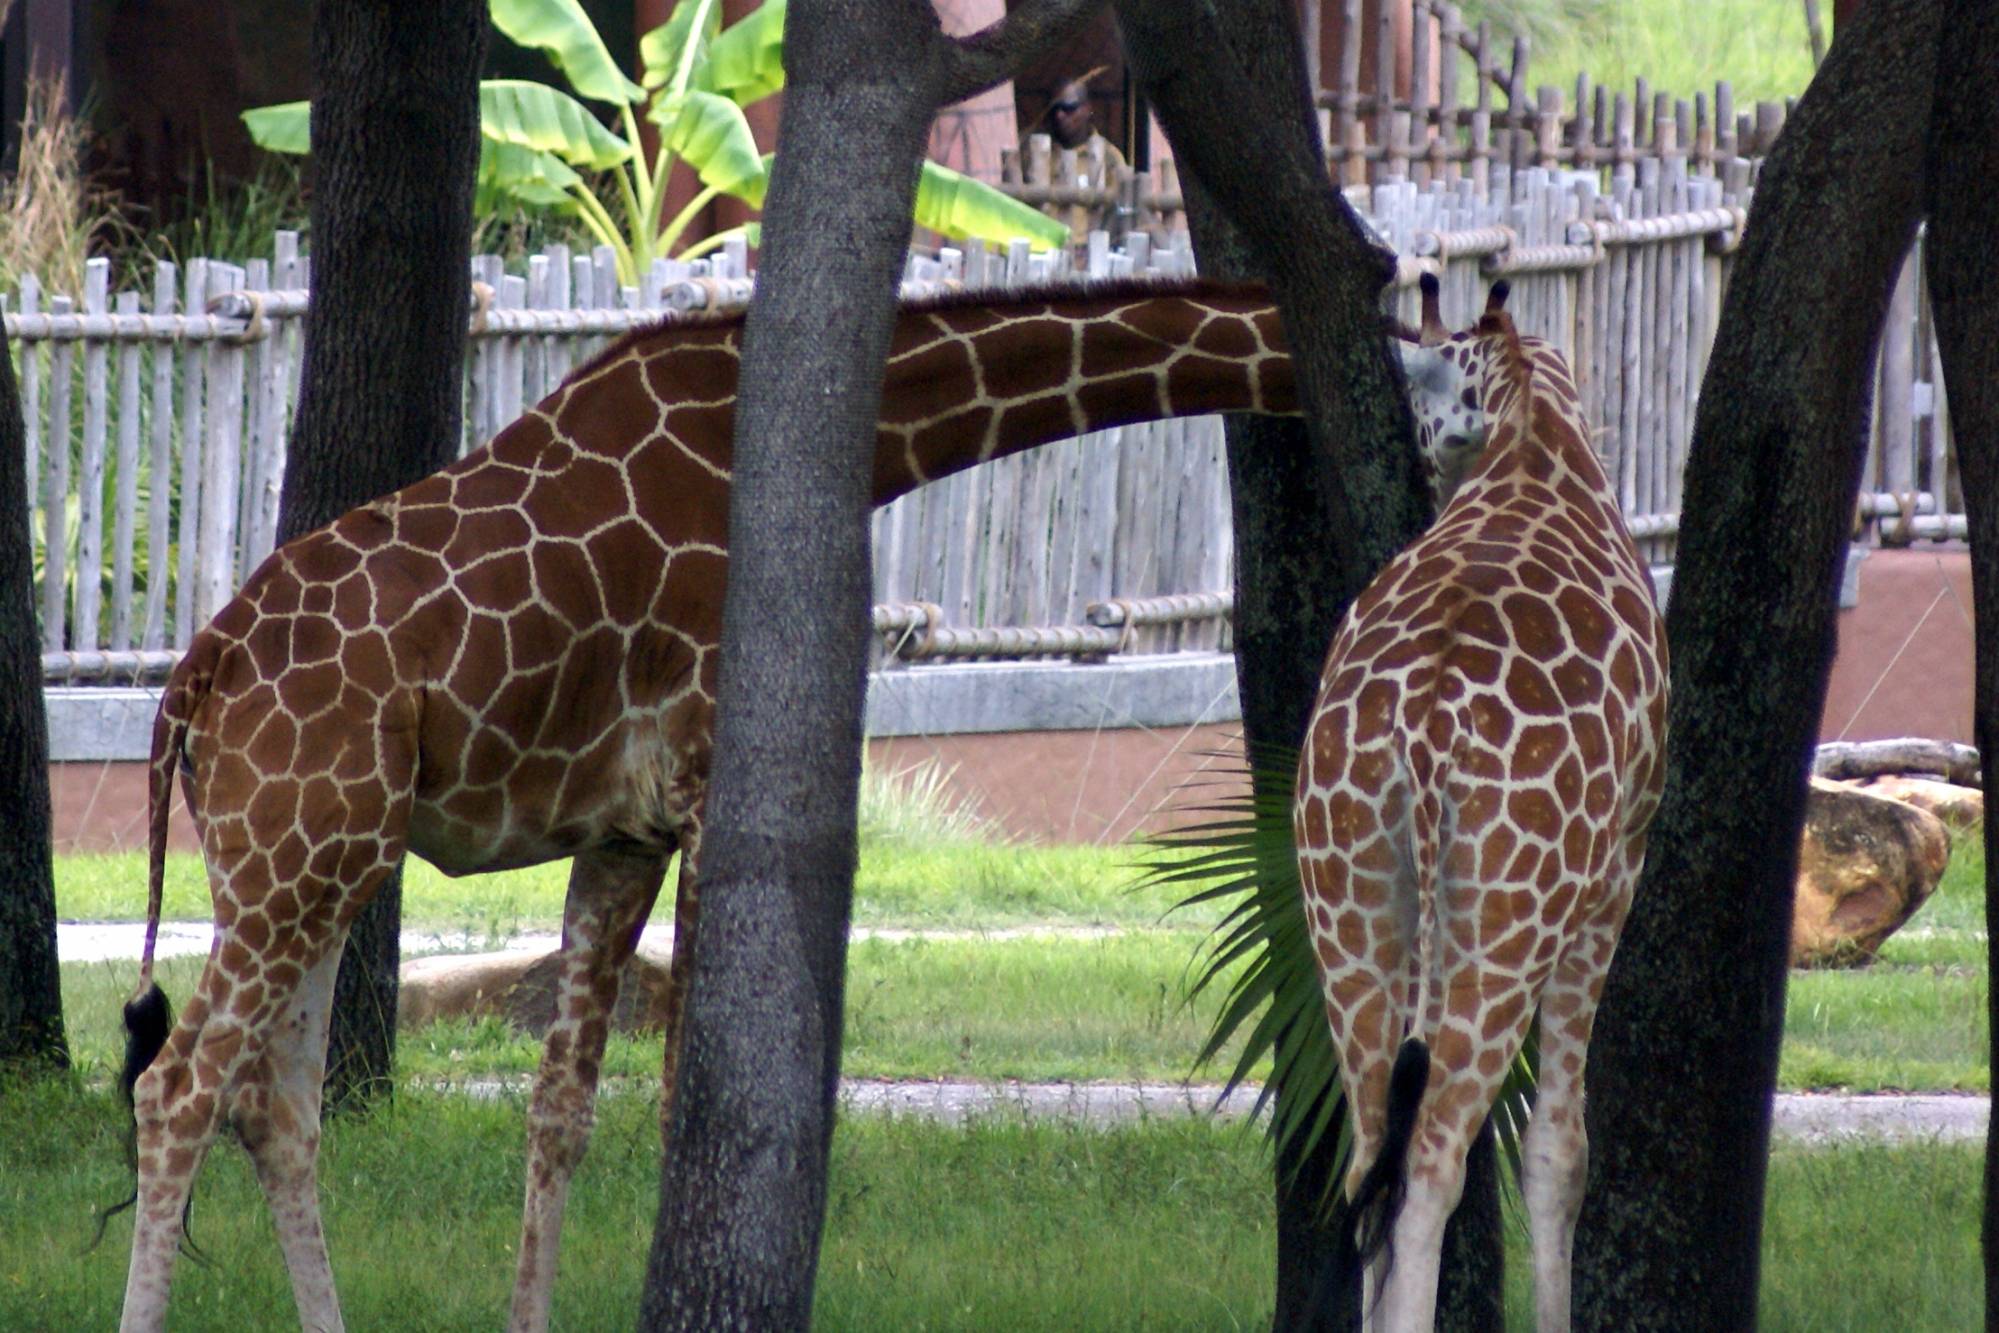 Feeding the Giraffes on the Savanna 2